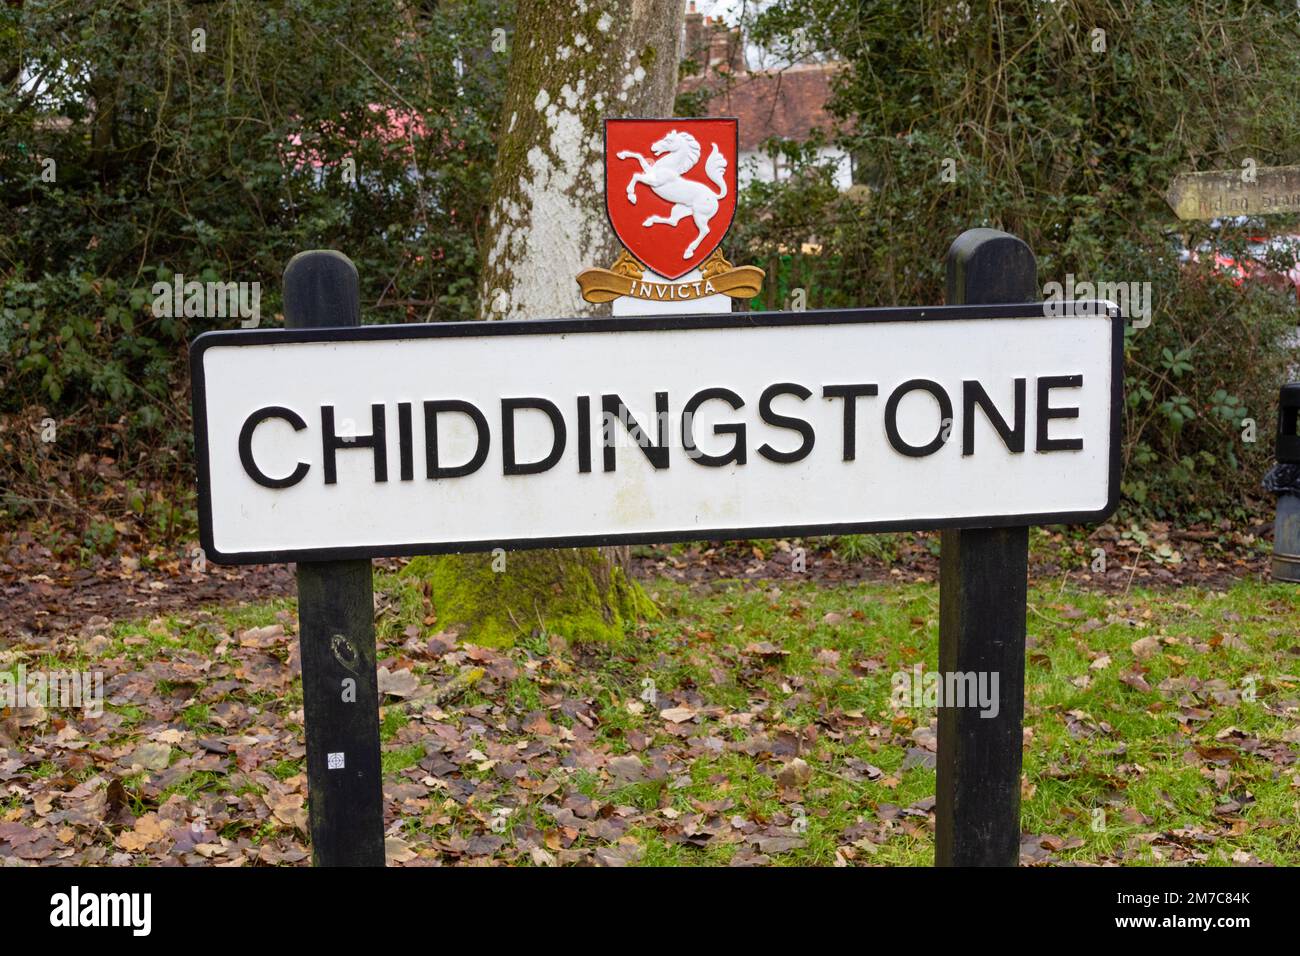 Sign for Chiddingstone village, kent, uk Stock Photo